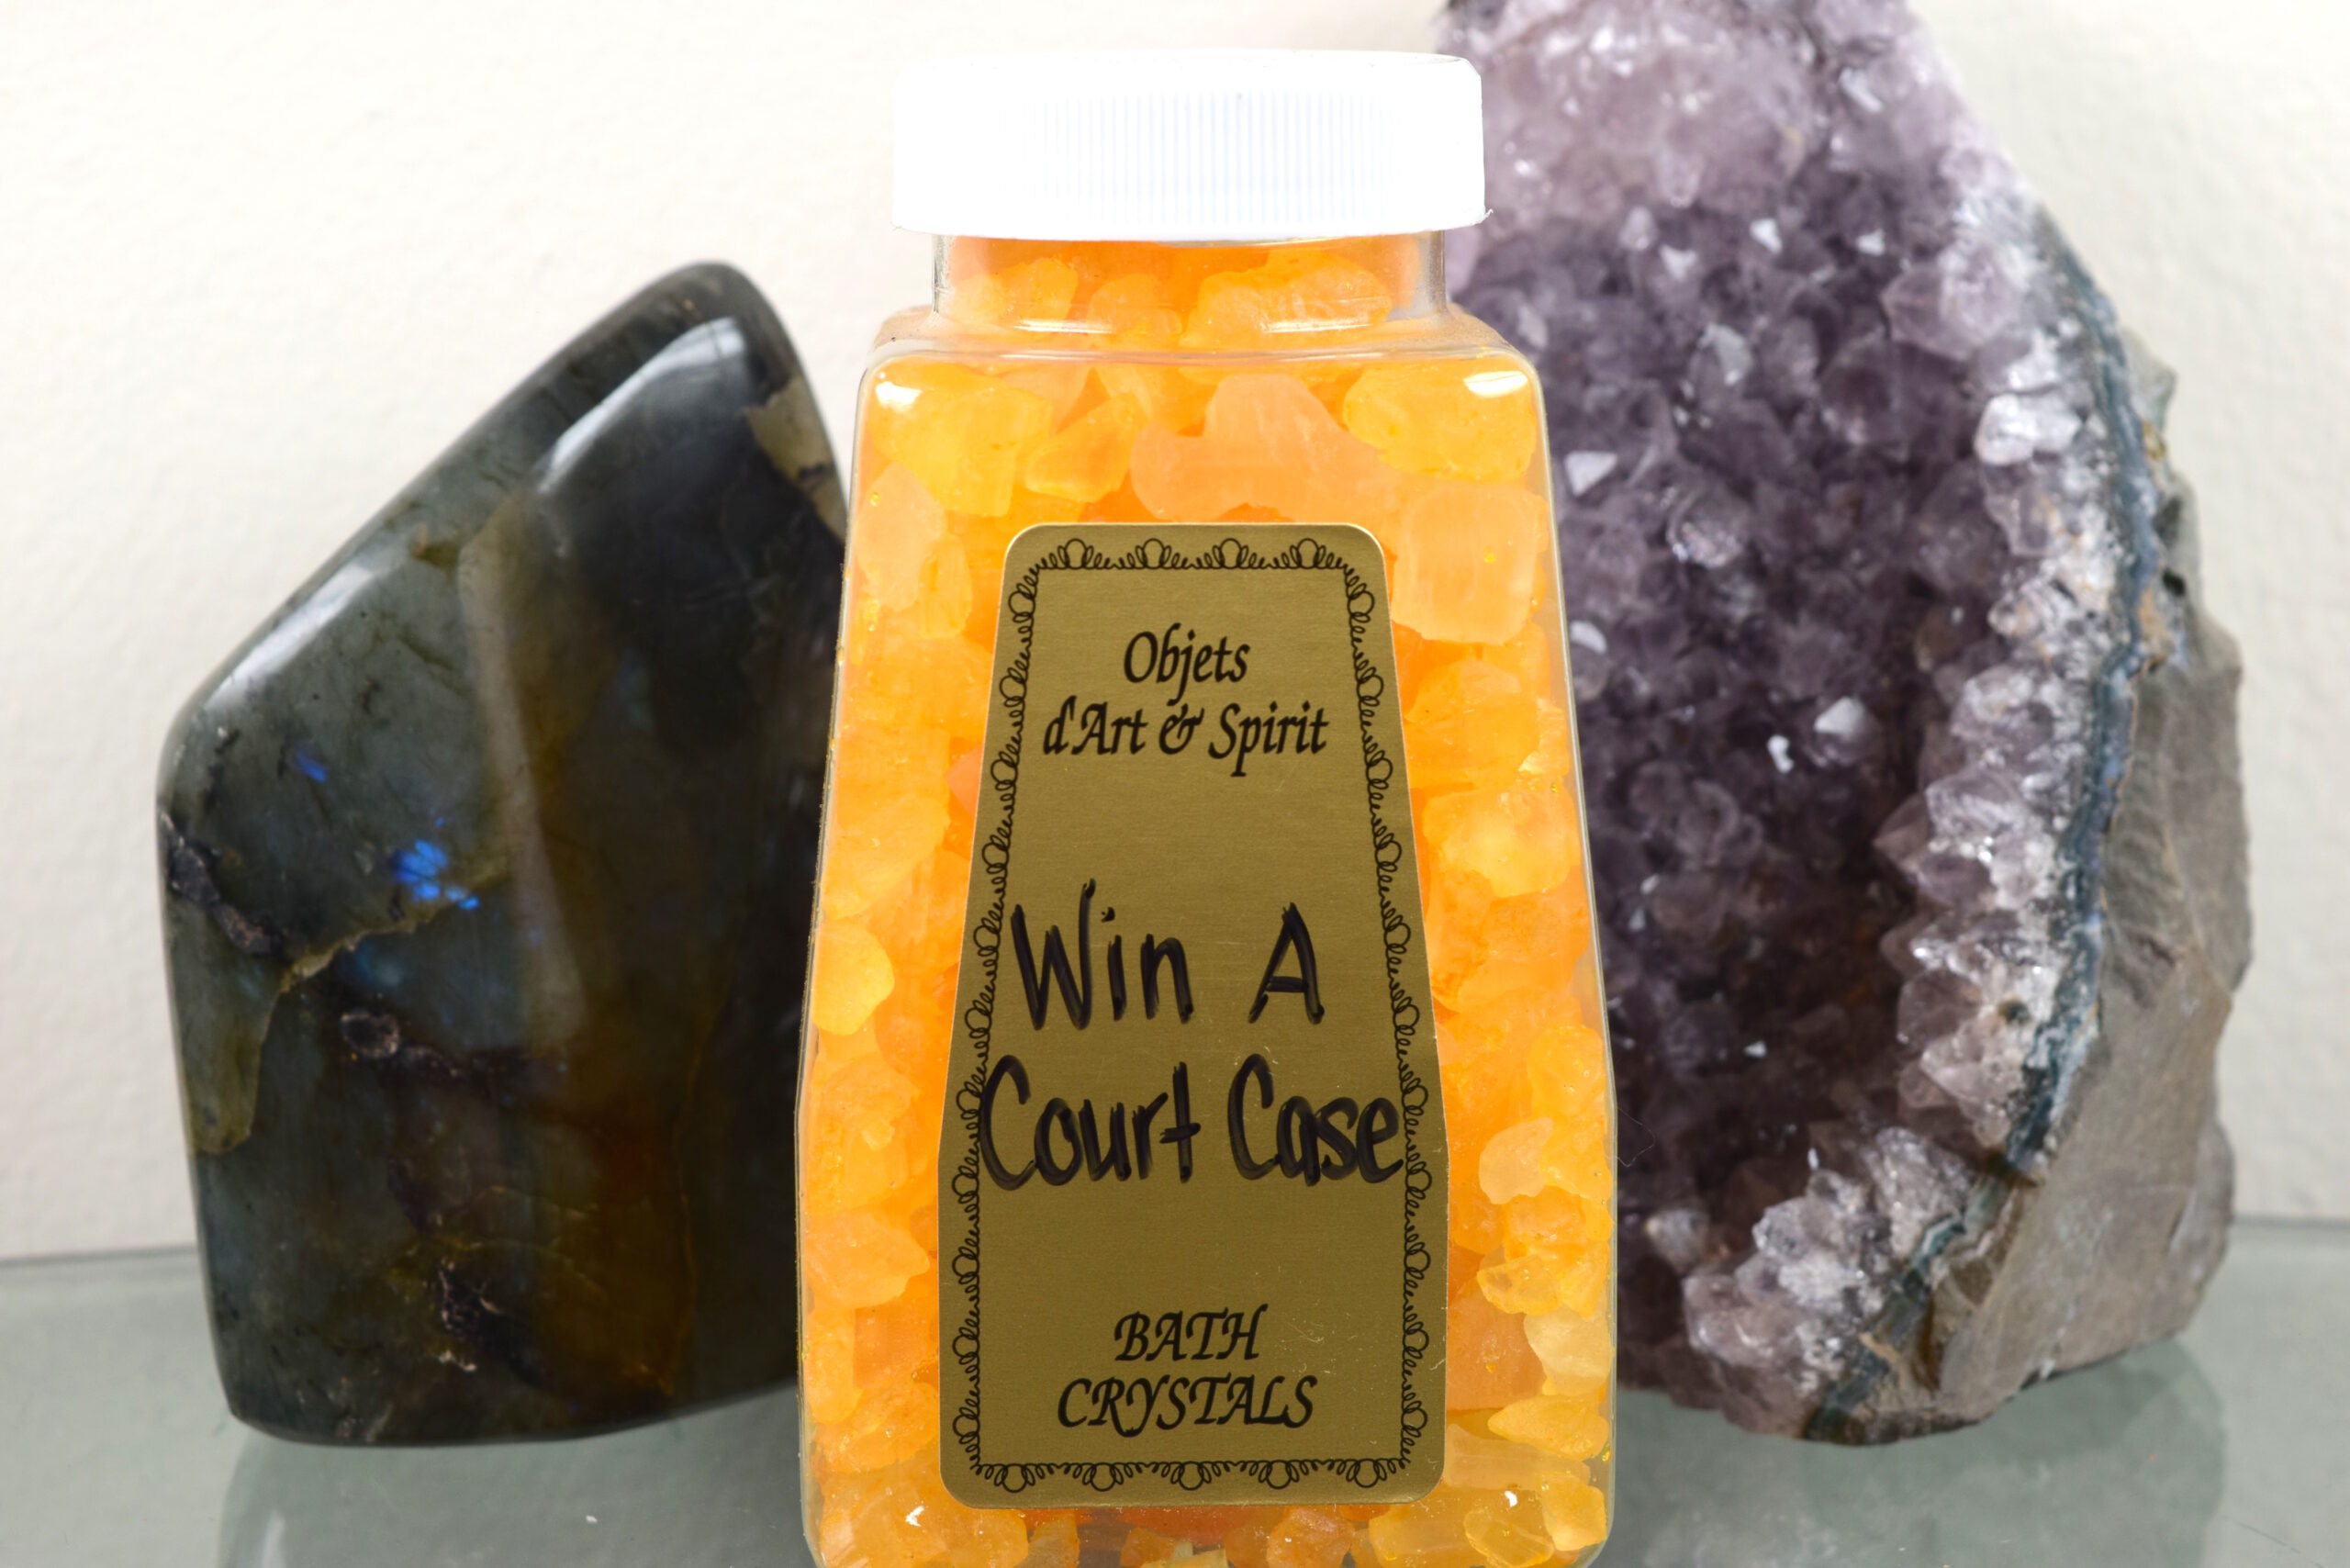 Win a Court Case Bath Salt Crystals